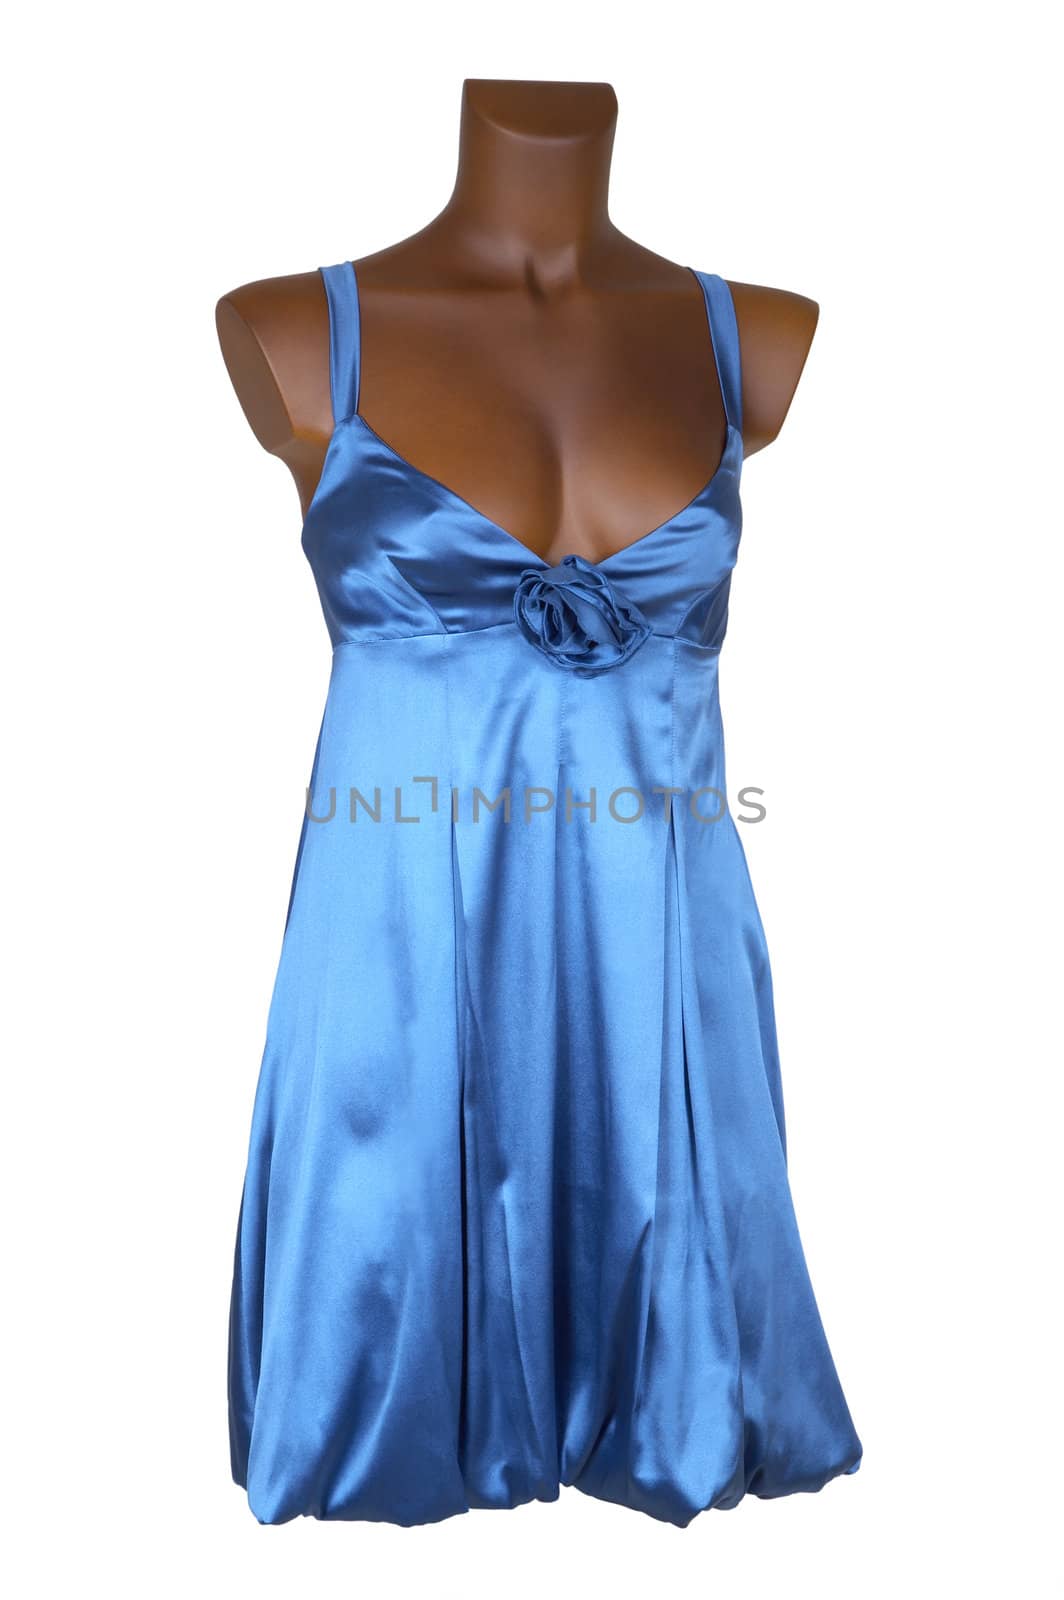 Blue silk dress on a white background